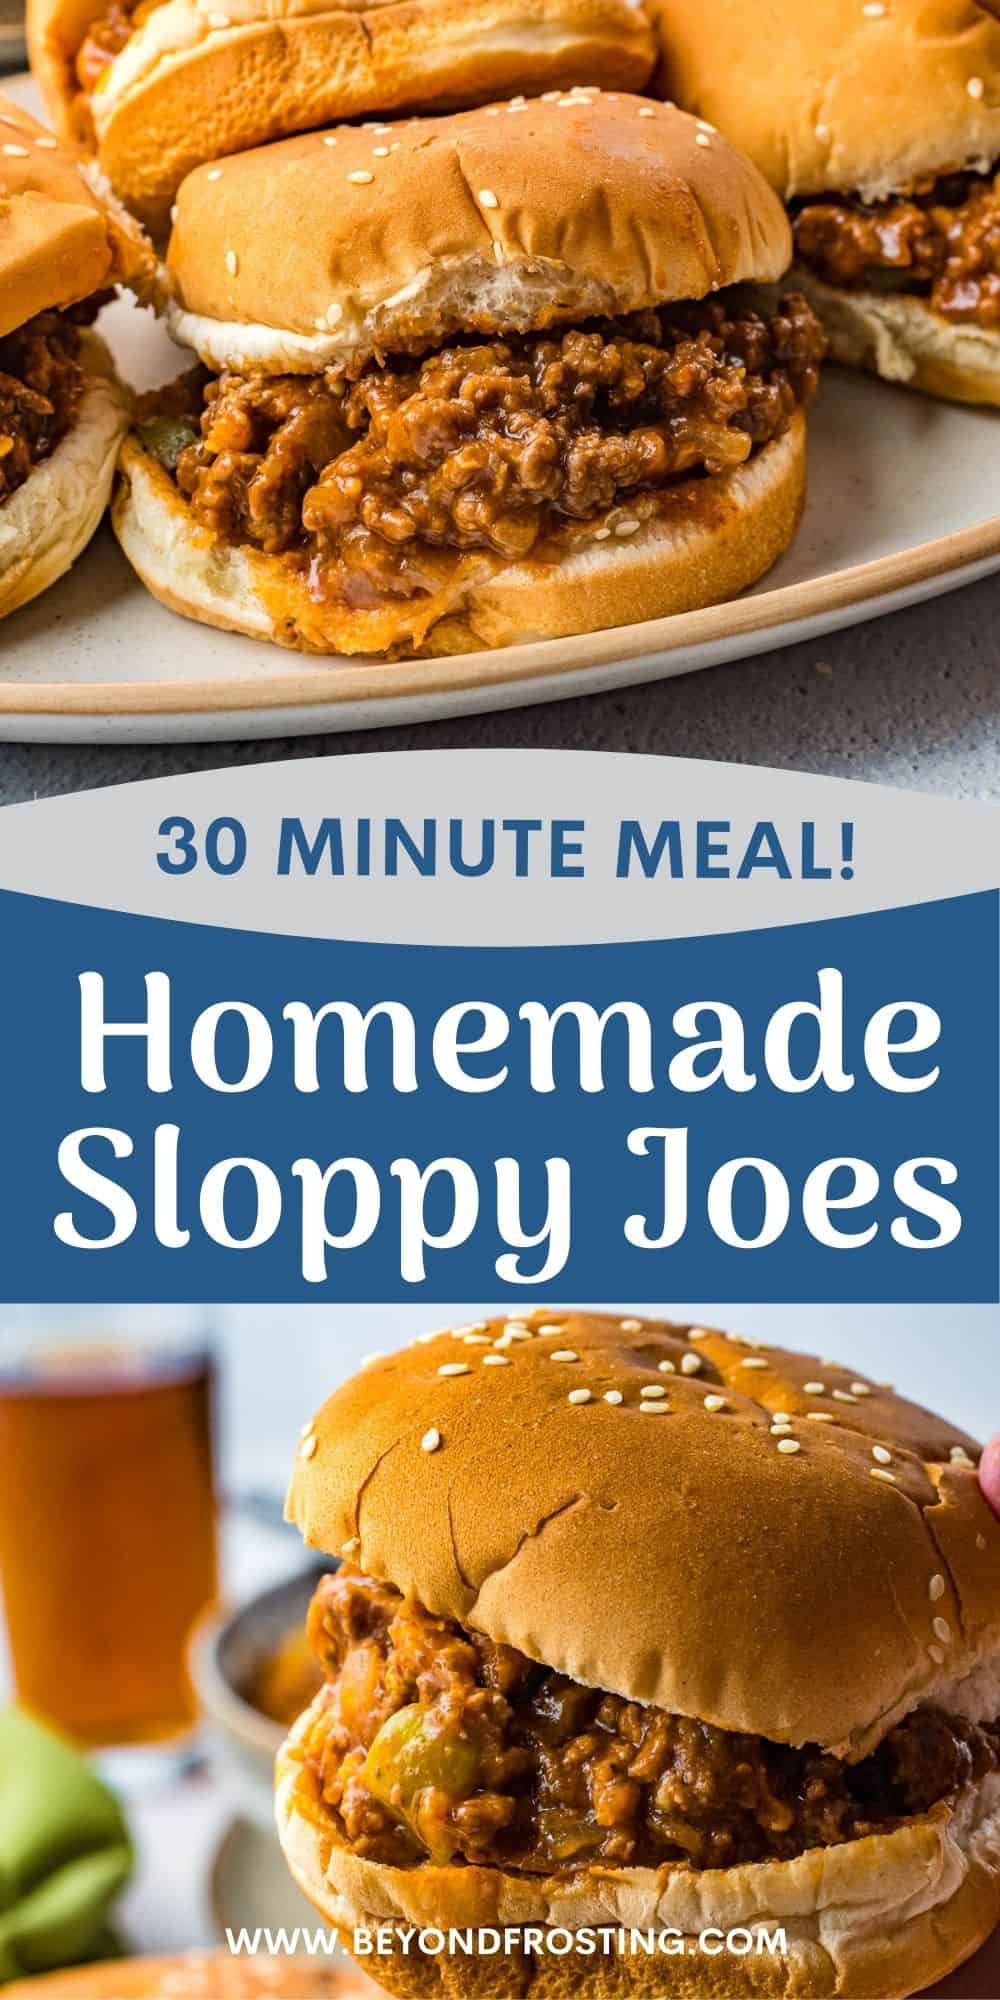 Homemade Sloppy Joes Recipe | Beyond Frosting